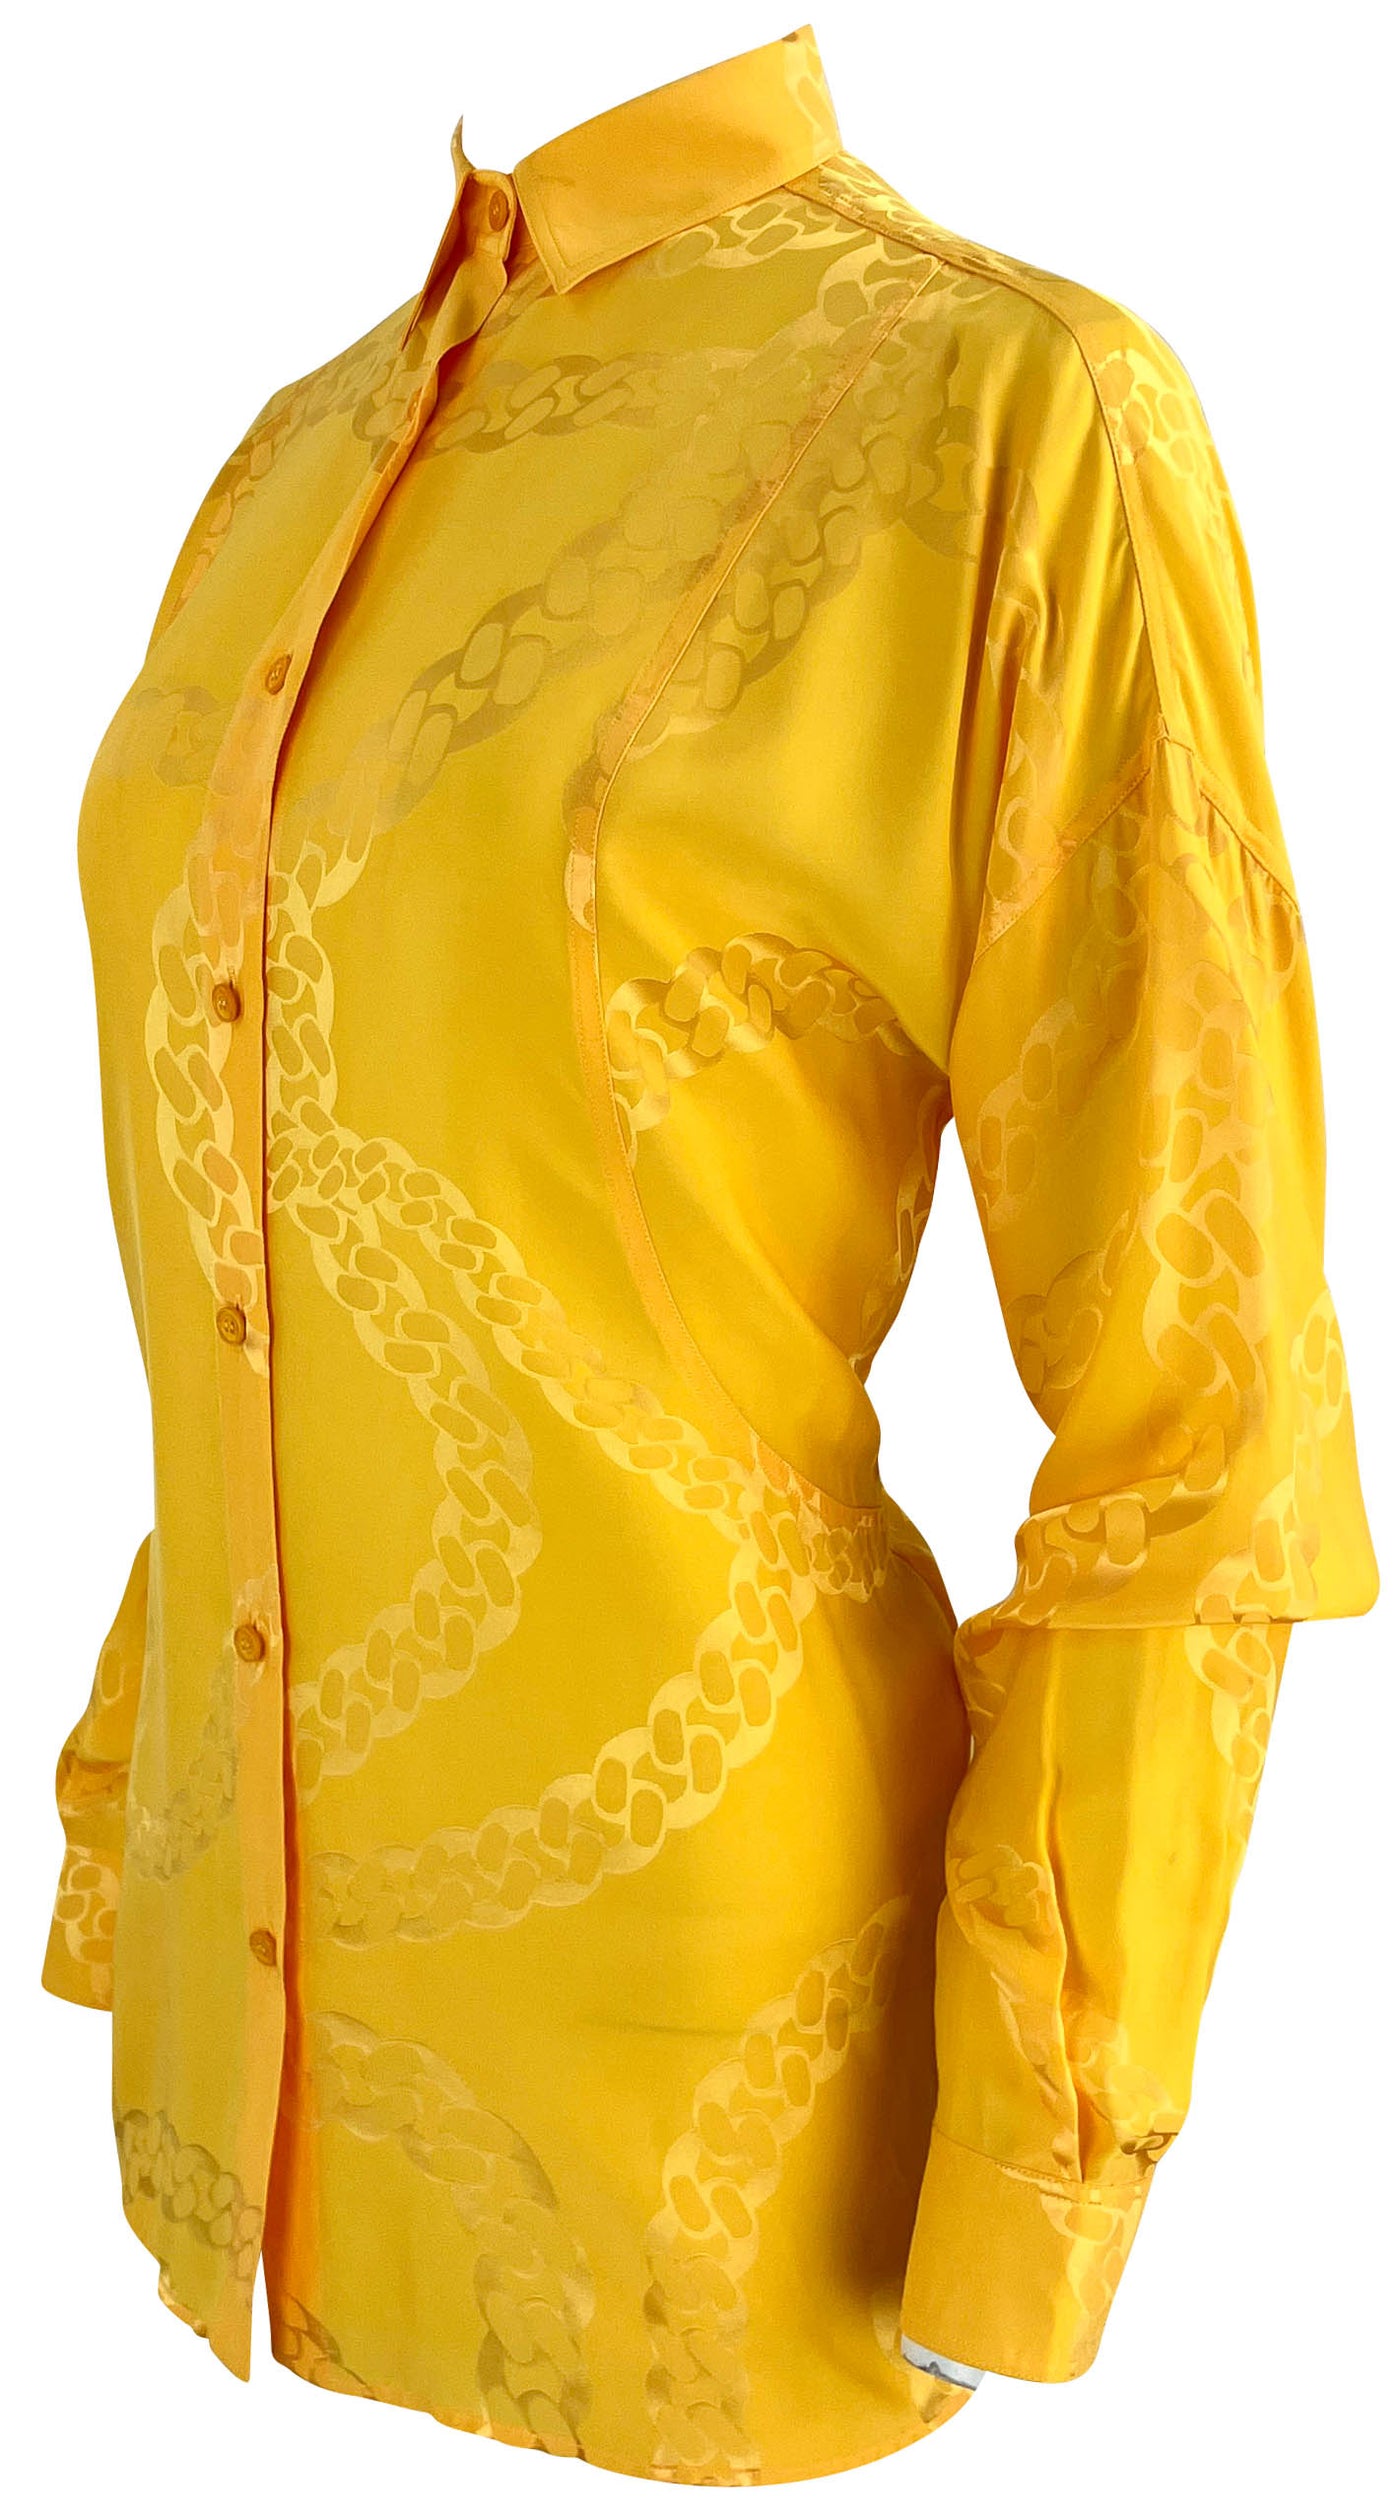 Stella McCartney Falabella Jacquard Shirt in Yellow - Discounts on Stella McCartney at UAL